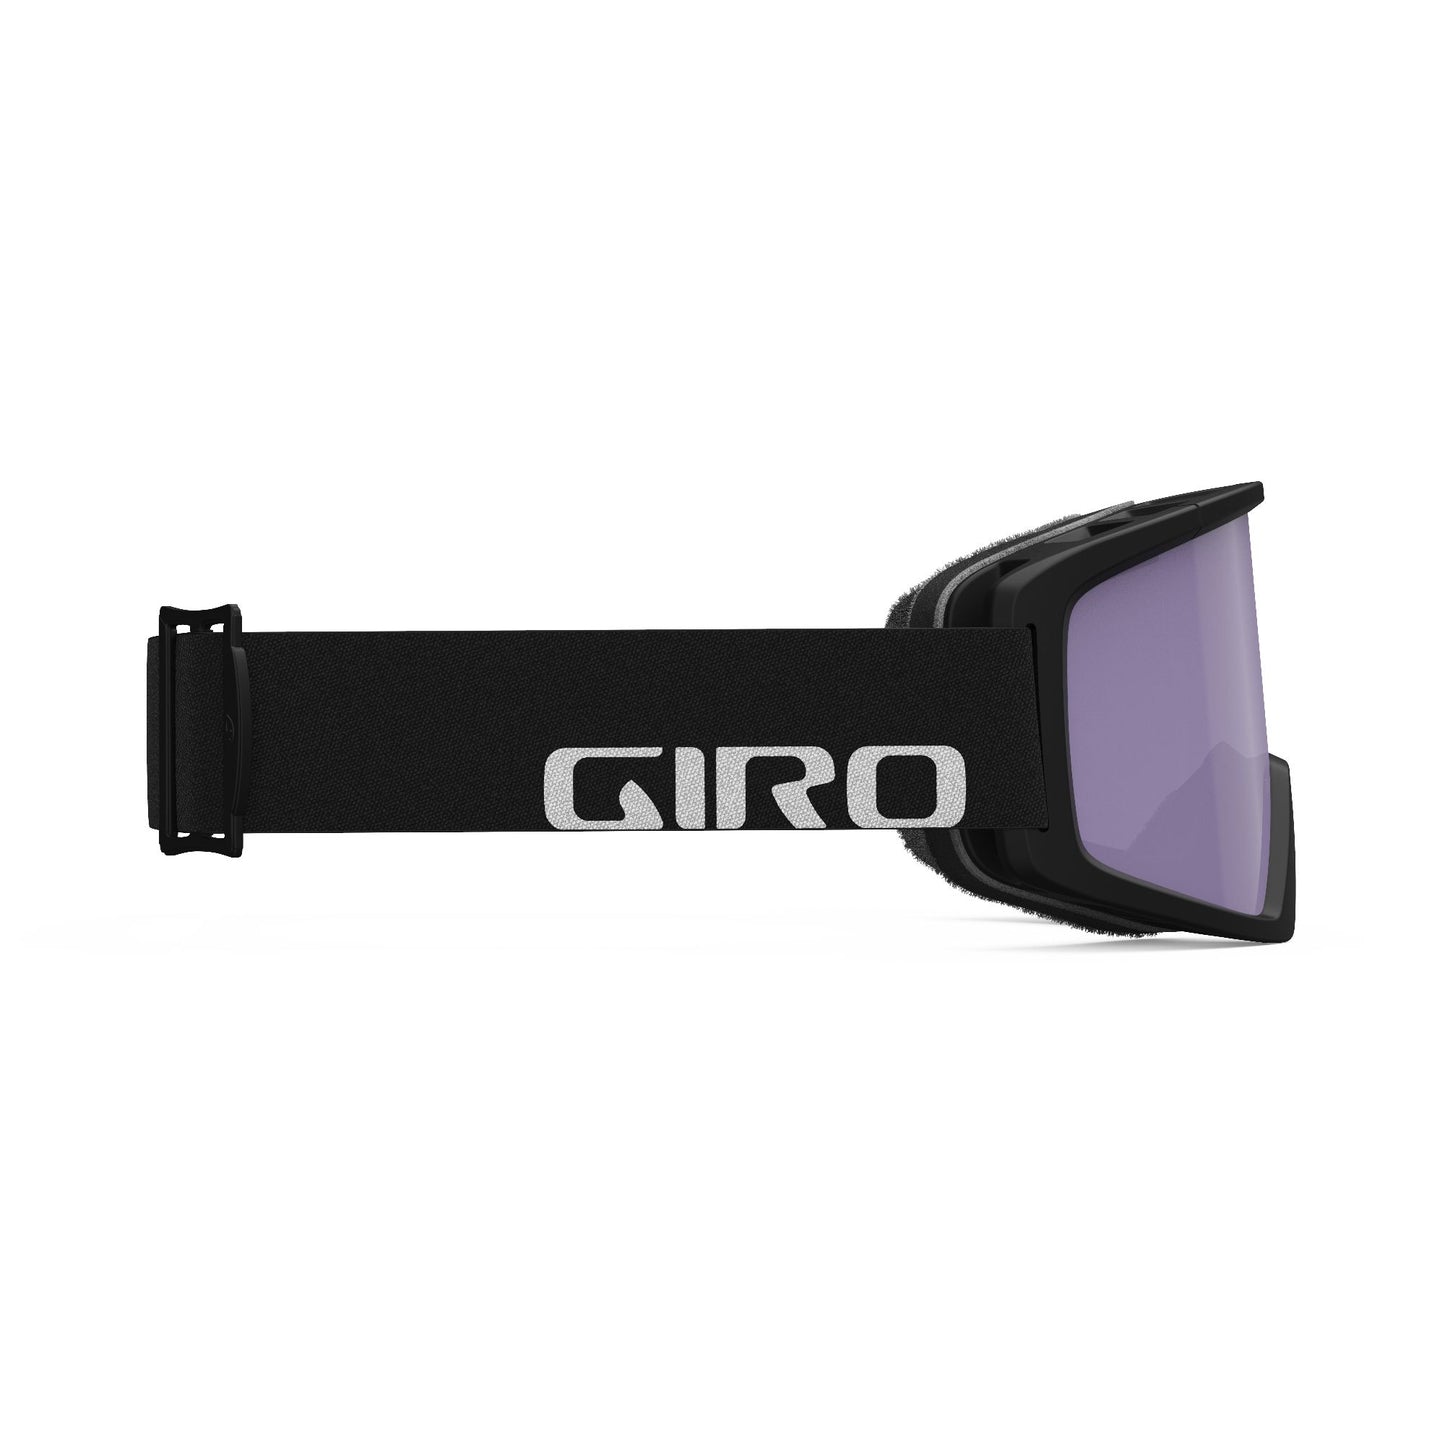 Giro Blok Snow Goggles Black Wordmark / Vivid Apex Snow Goggles